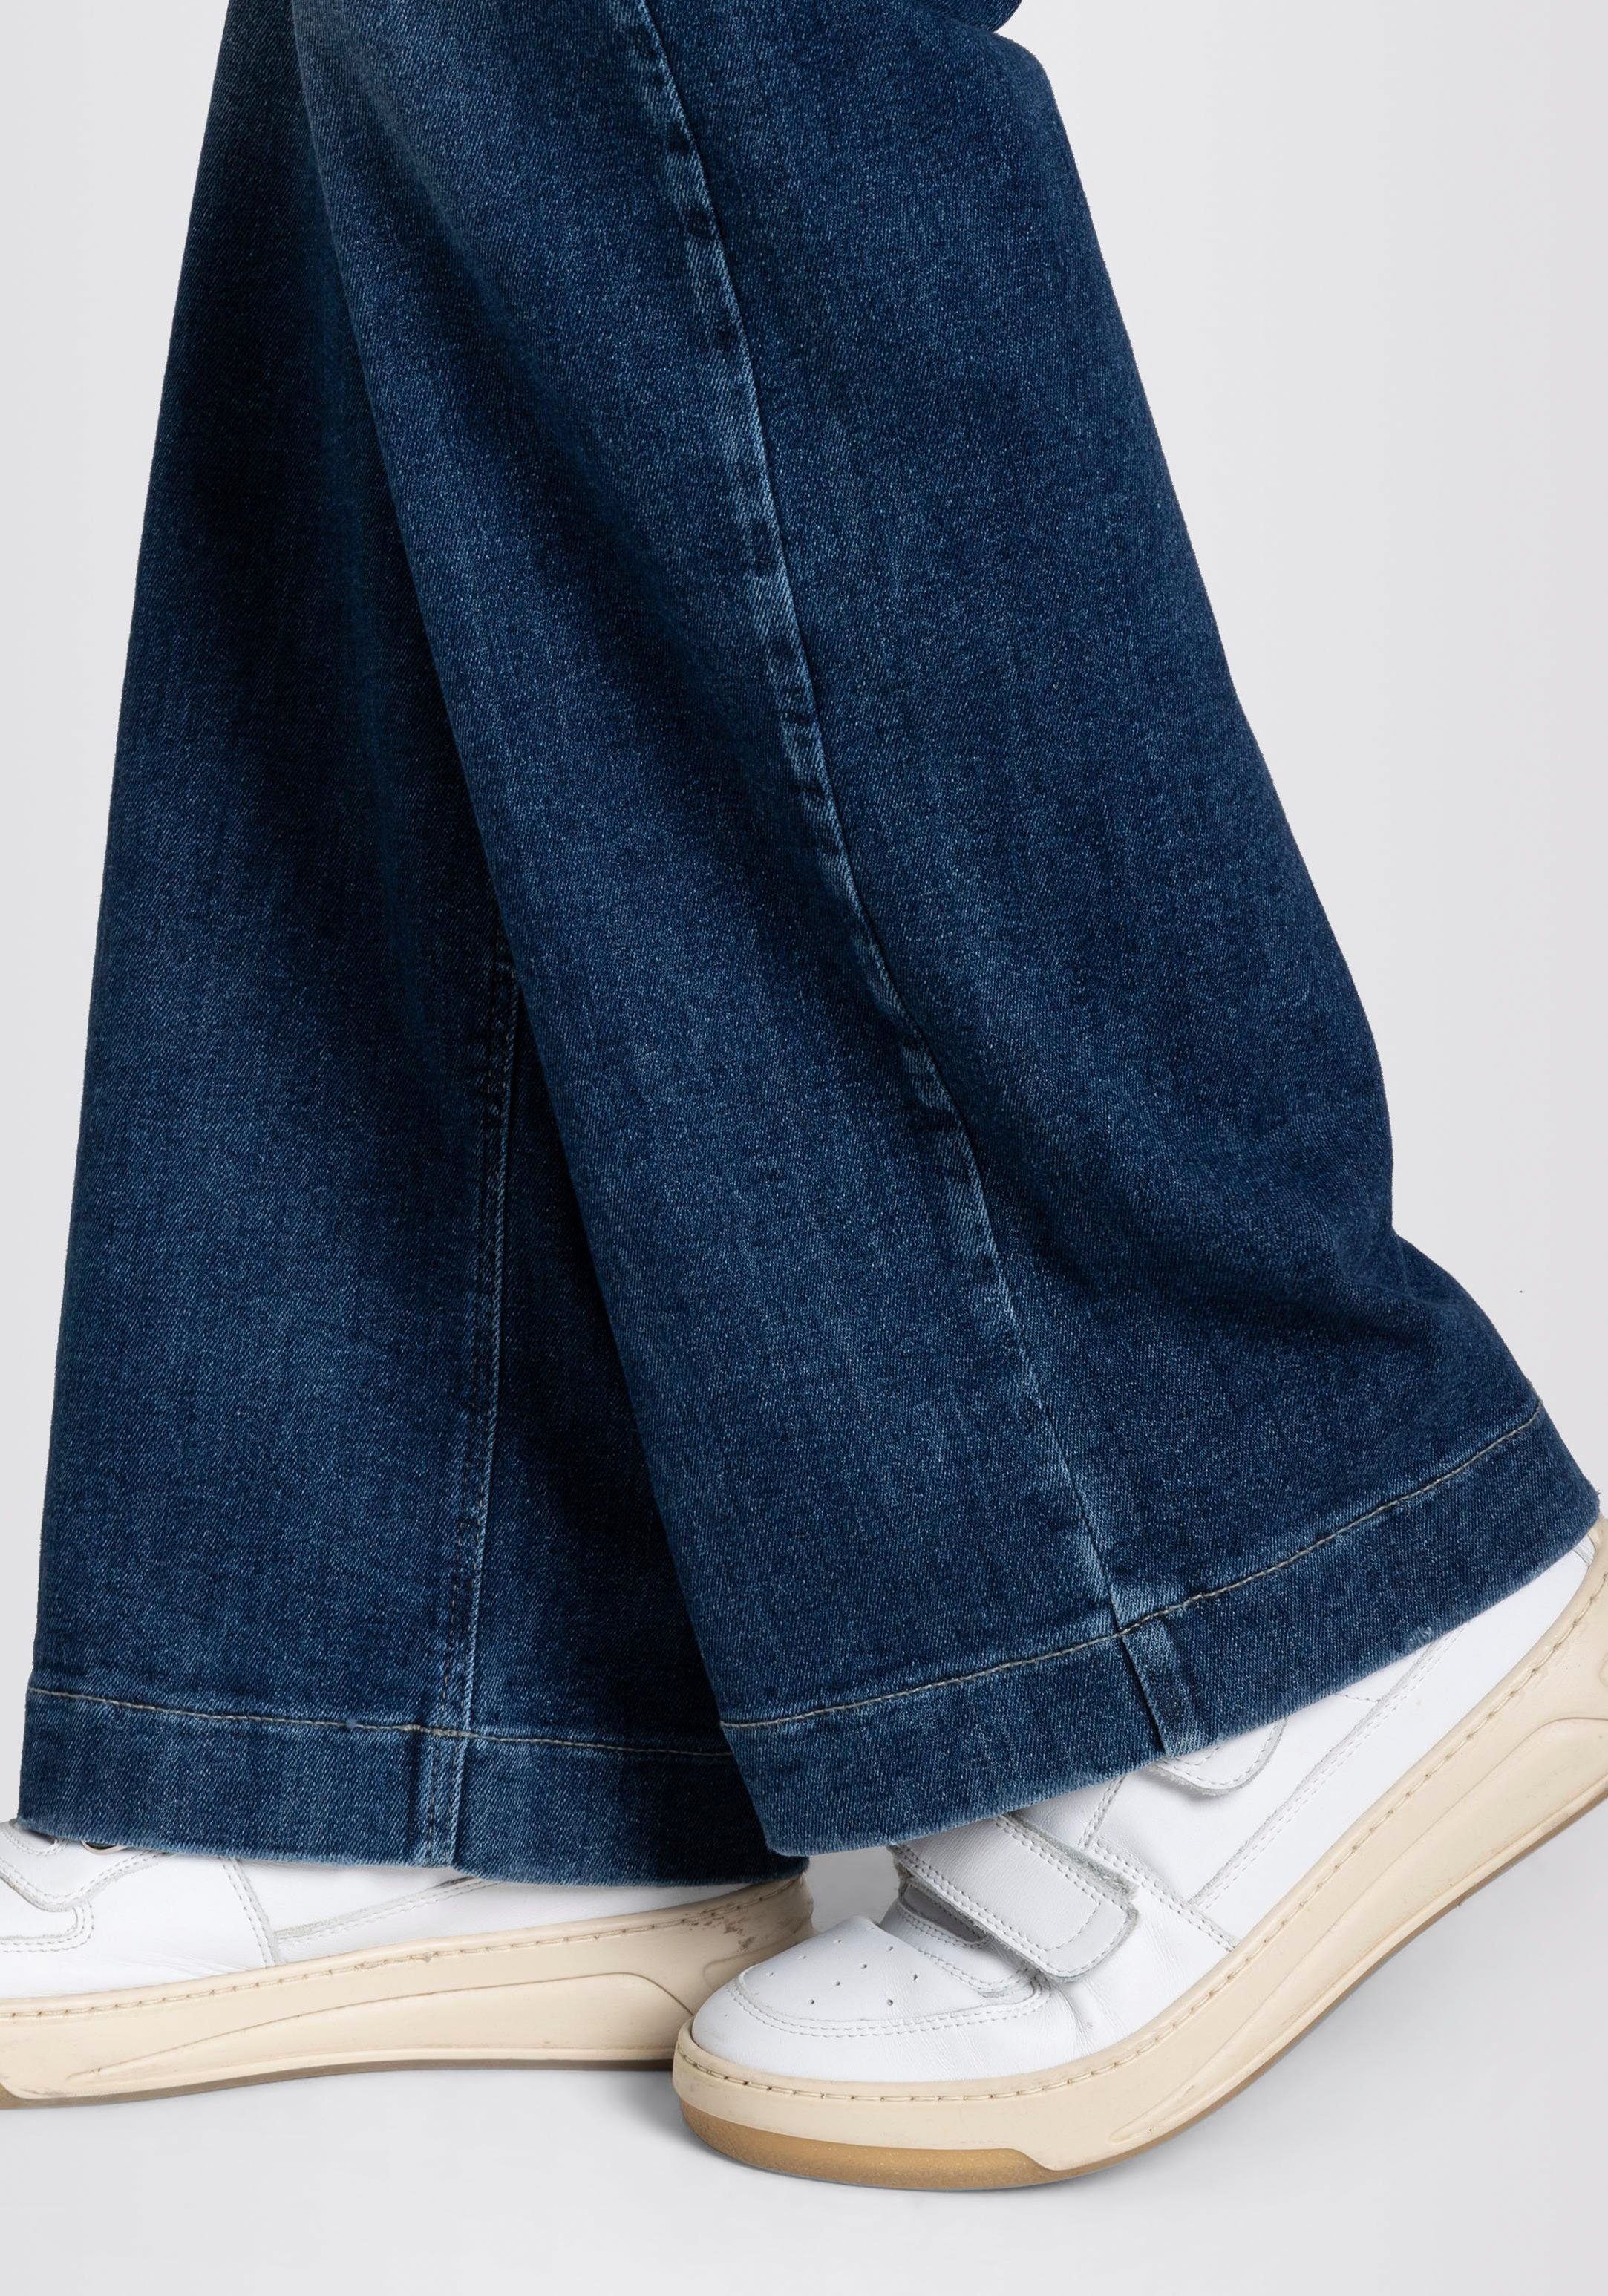 Dream formendem mit MAC cobalt authentic authentic Jeans wash Shaping-Effekt Weite Wide